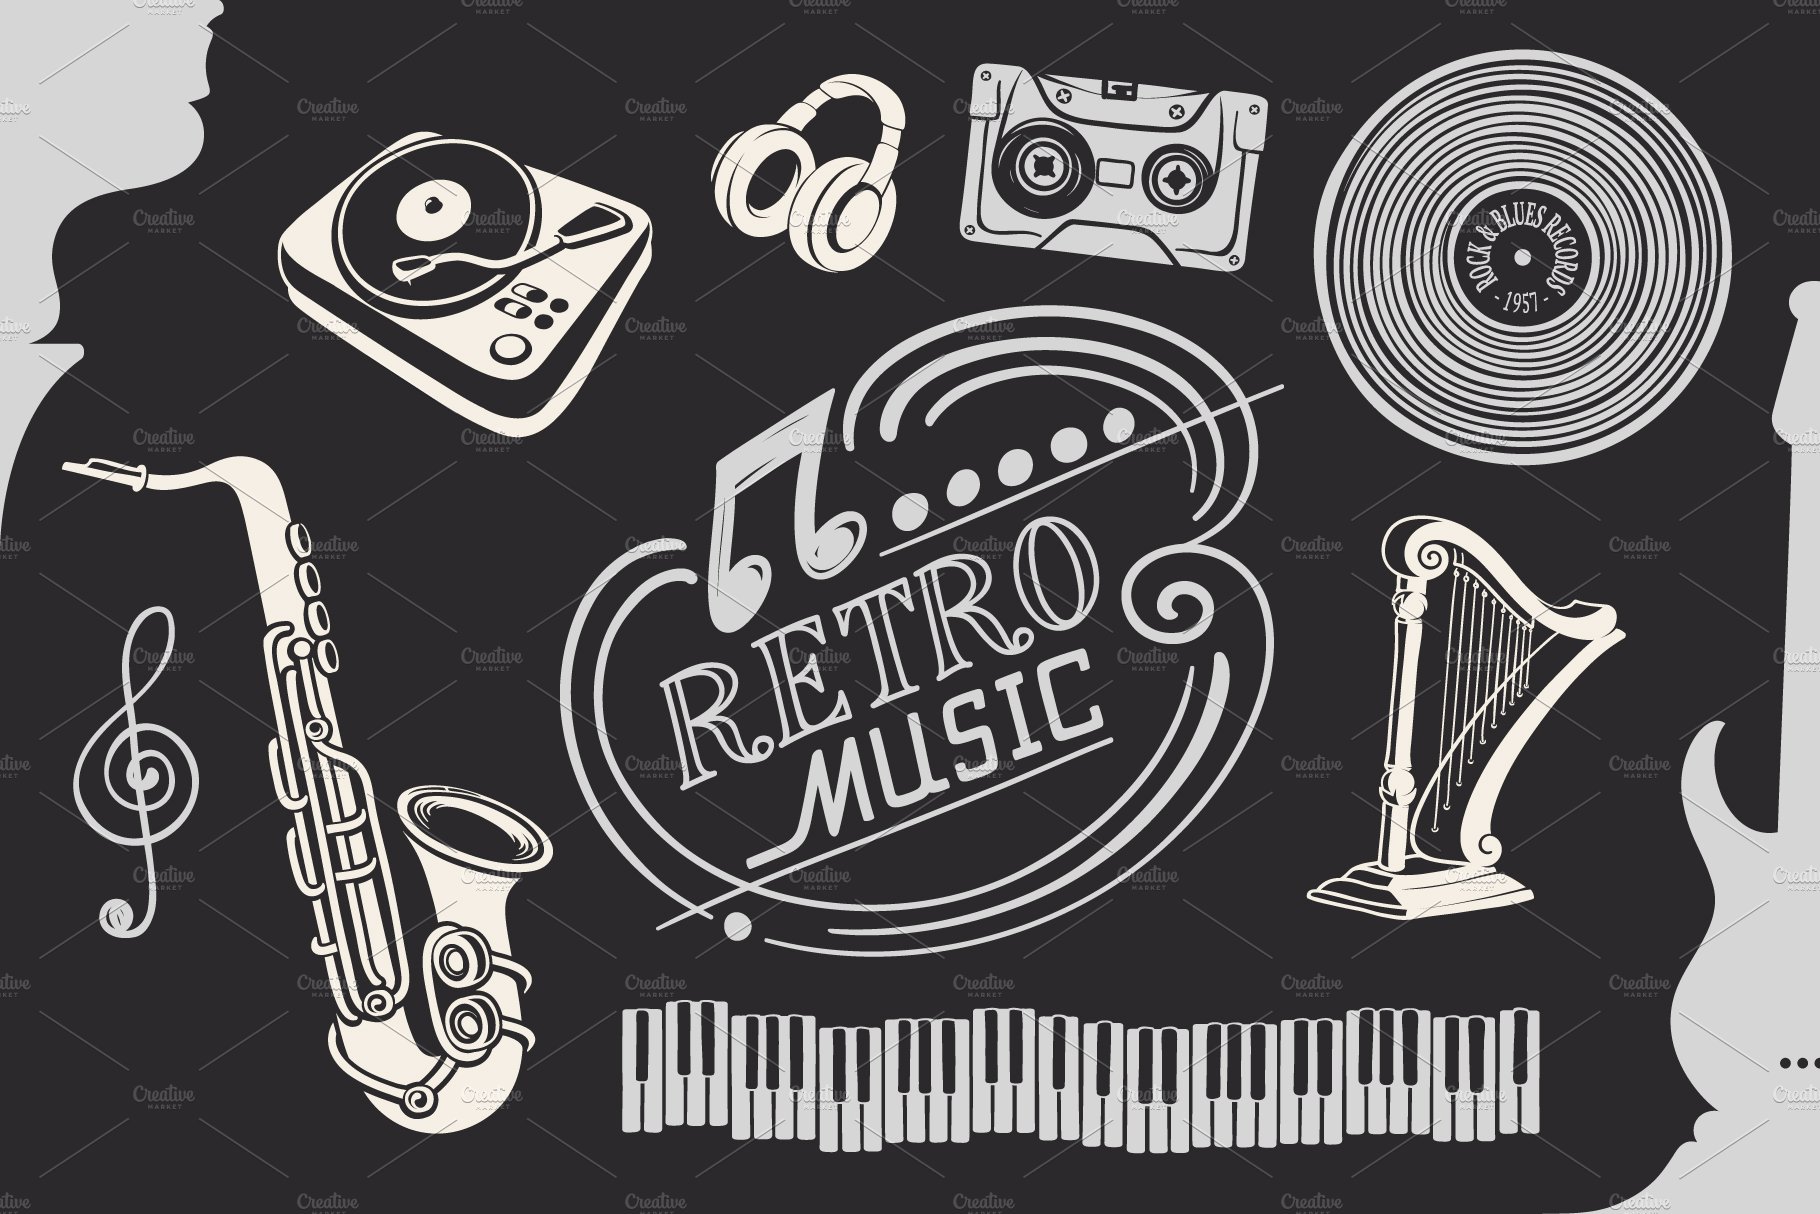 Retro Music Illustrations & Decor cover image.